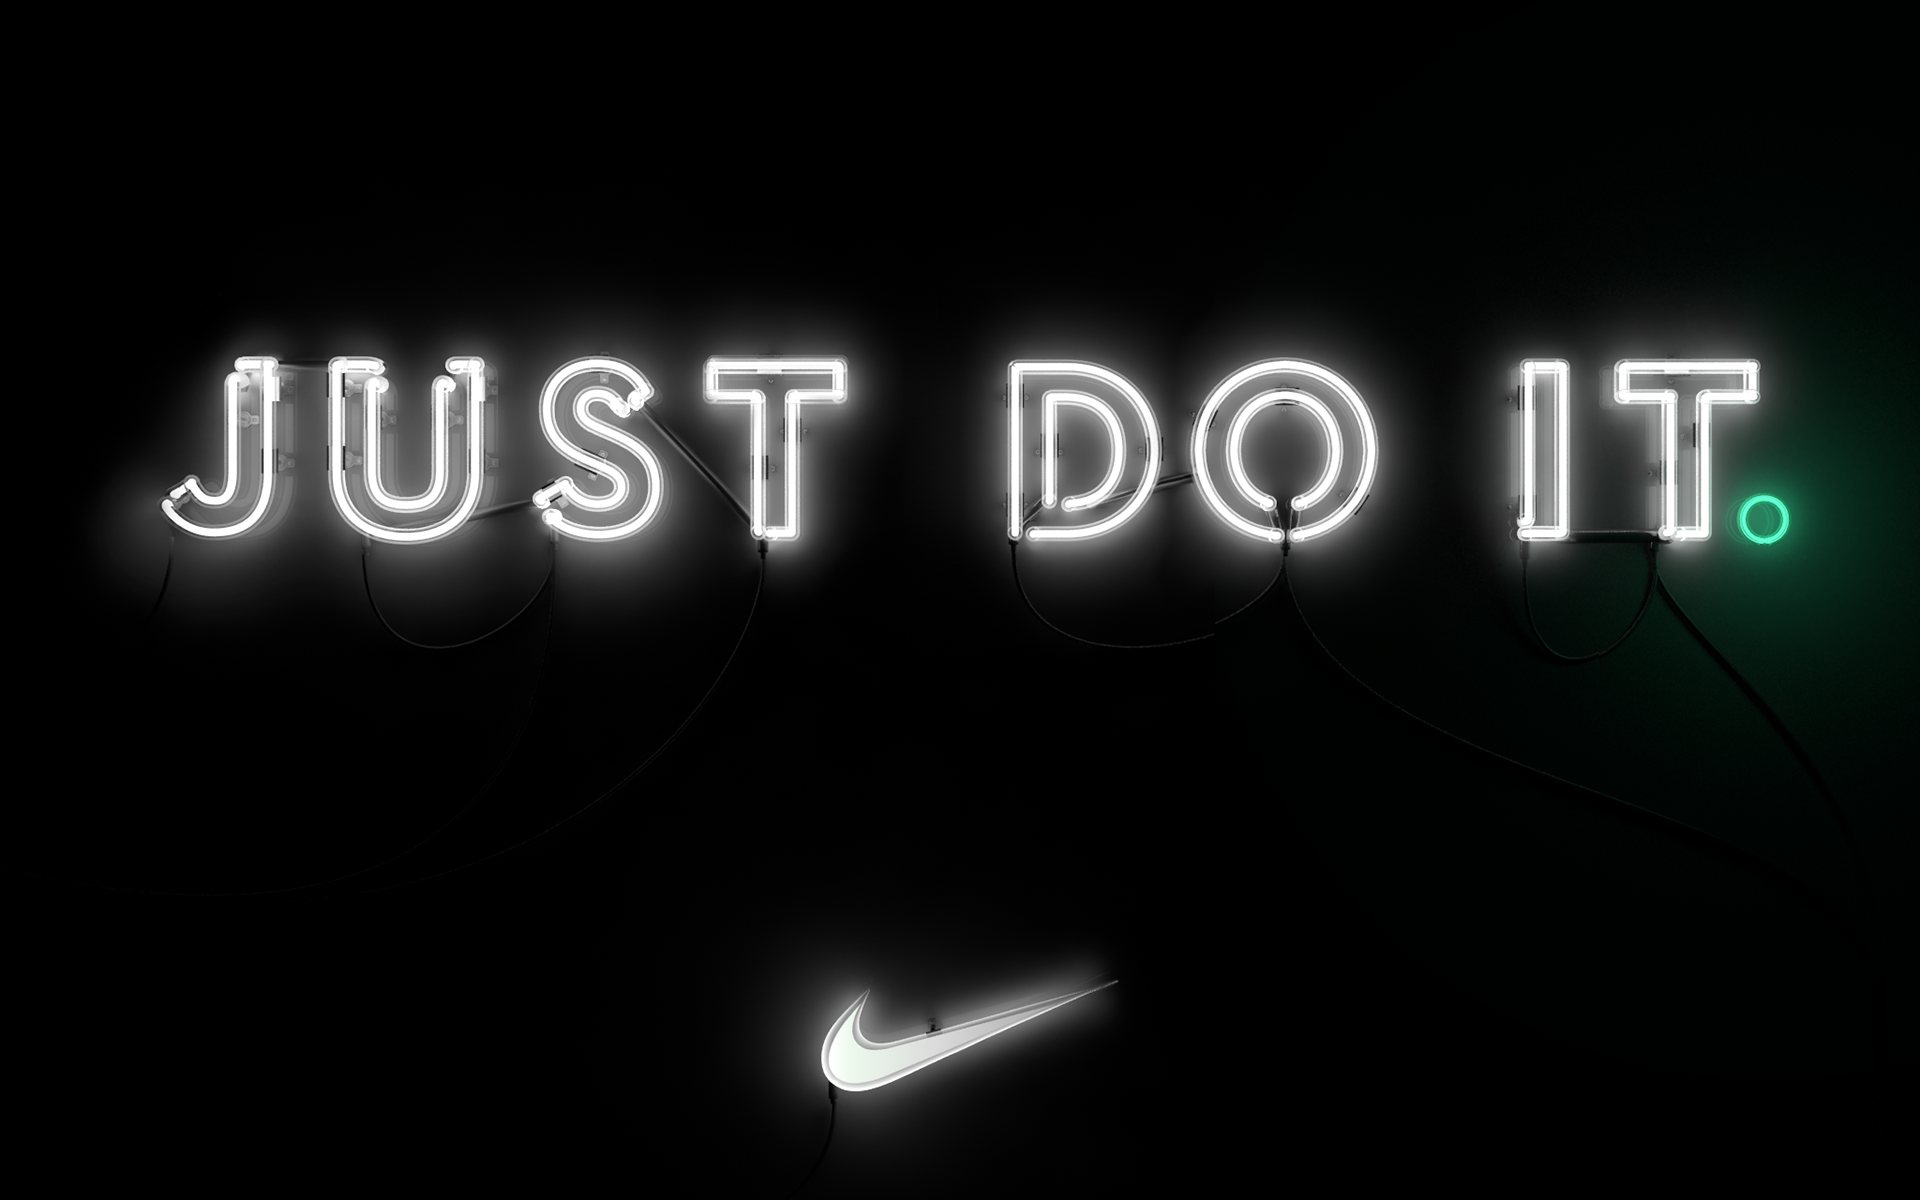 Nike - We Own The Night